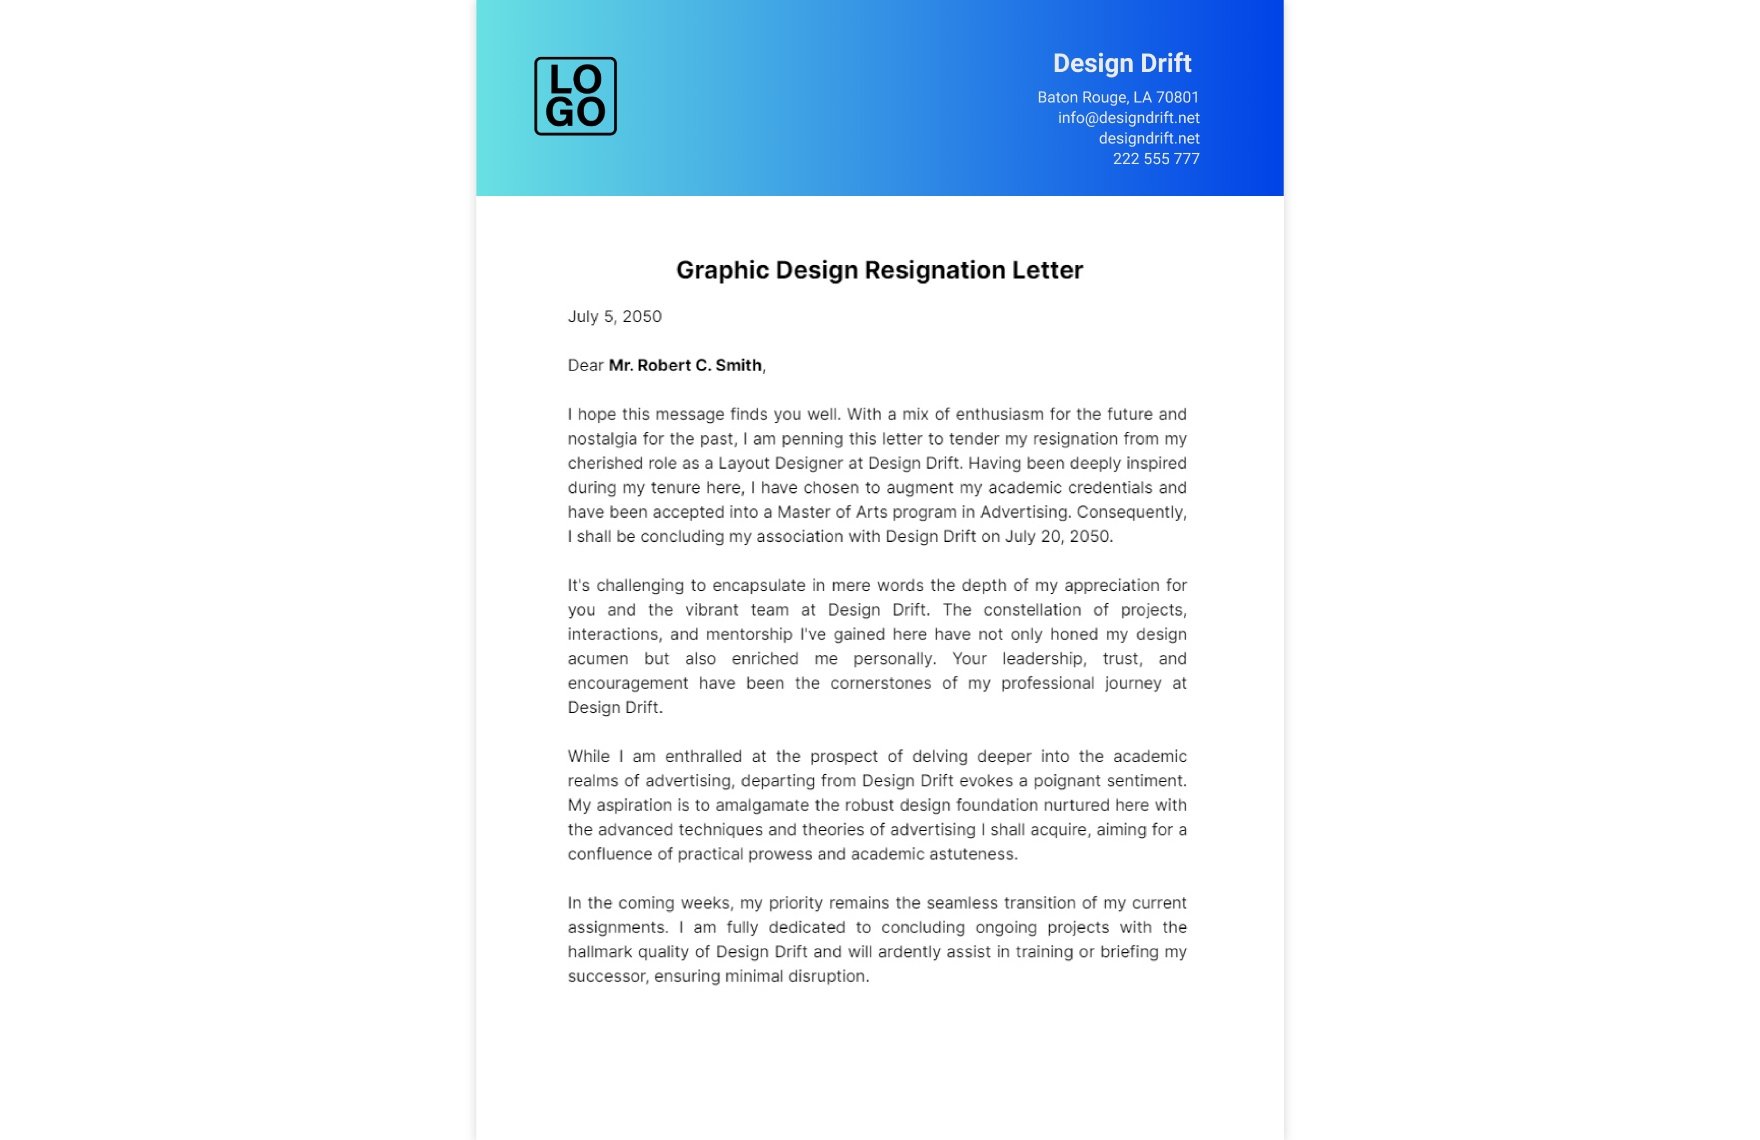 Graphic Design Resignation Letter Template